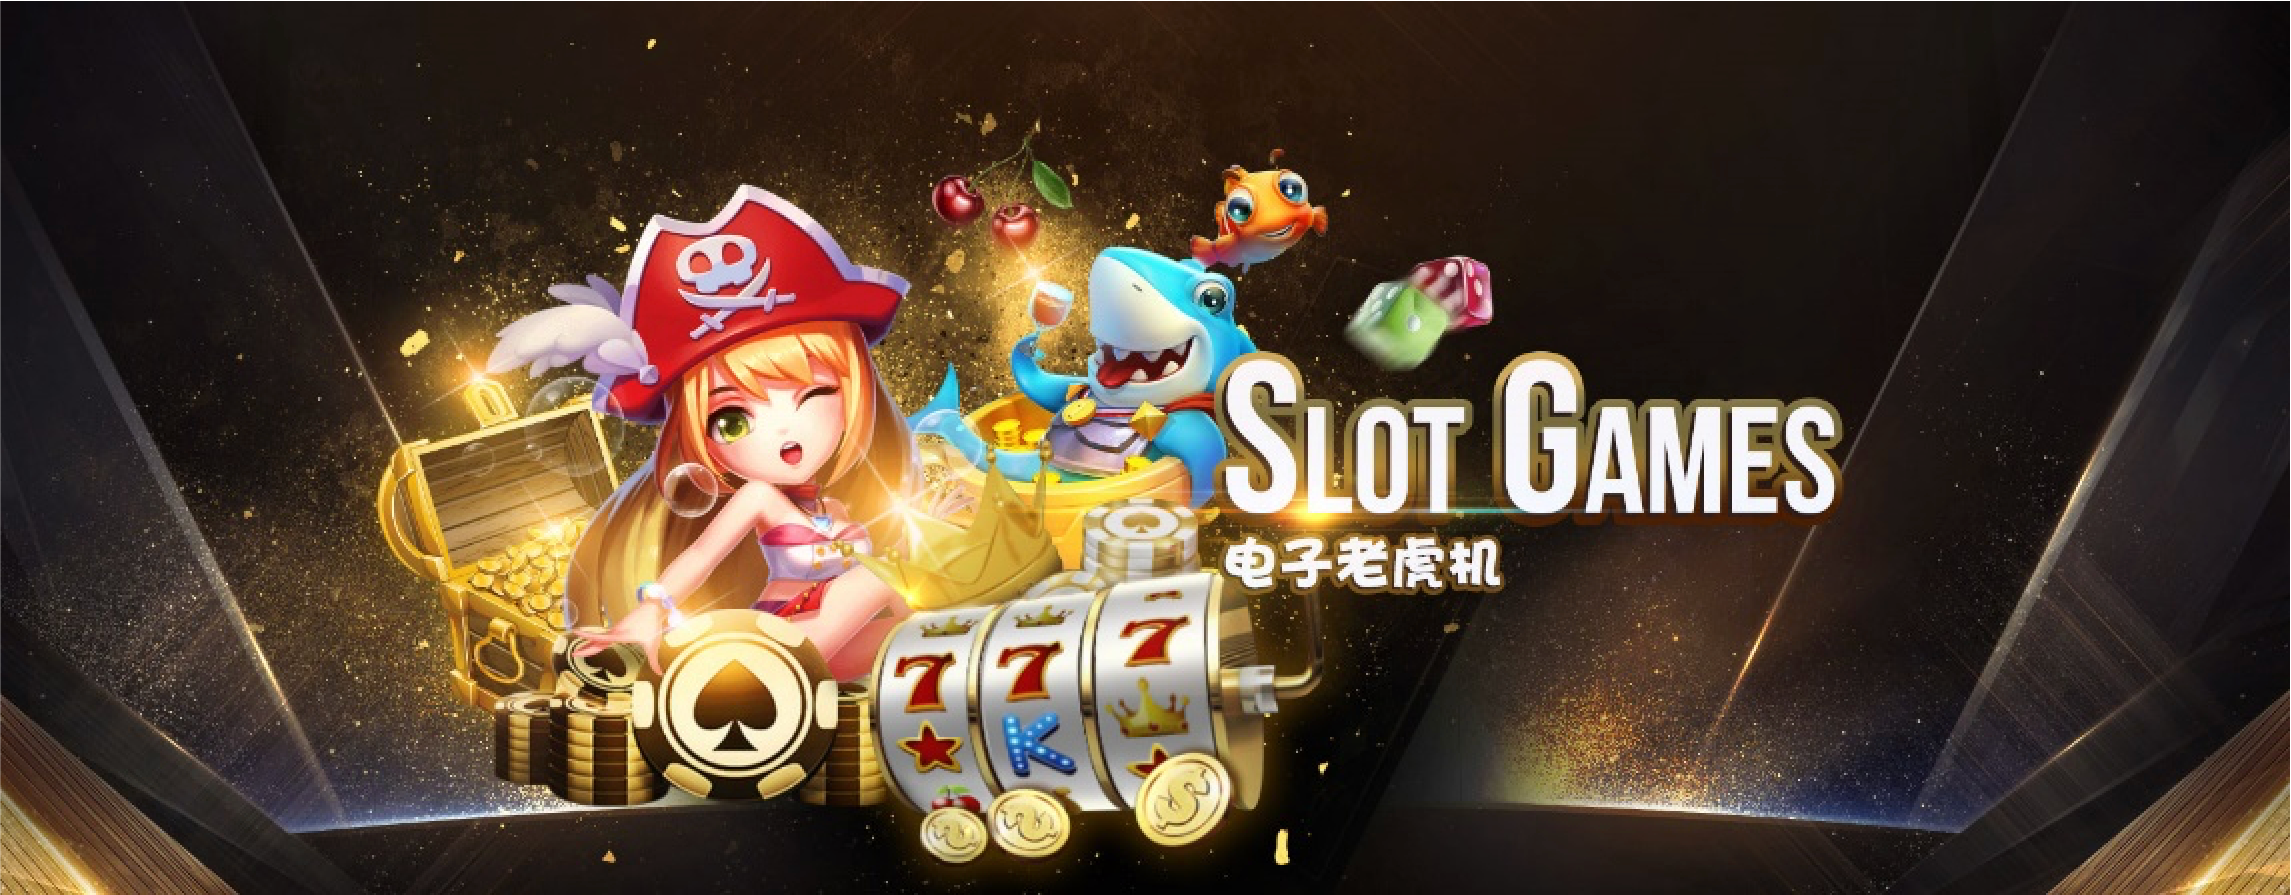 slot game banner